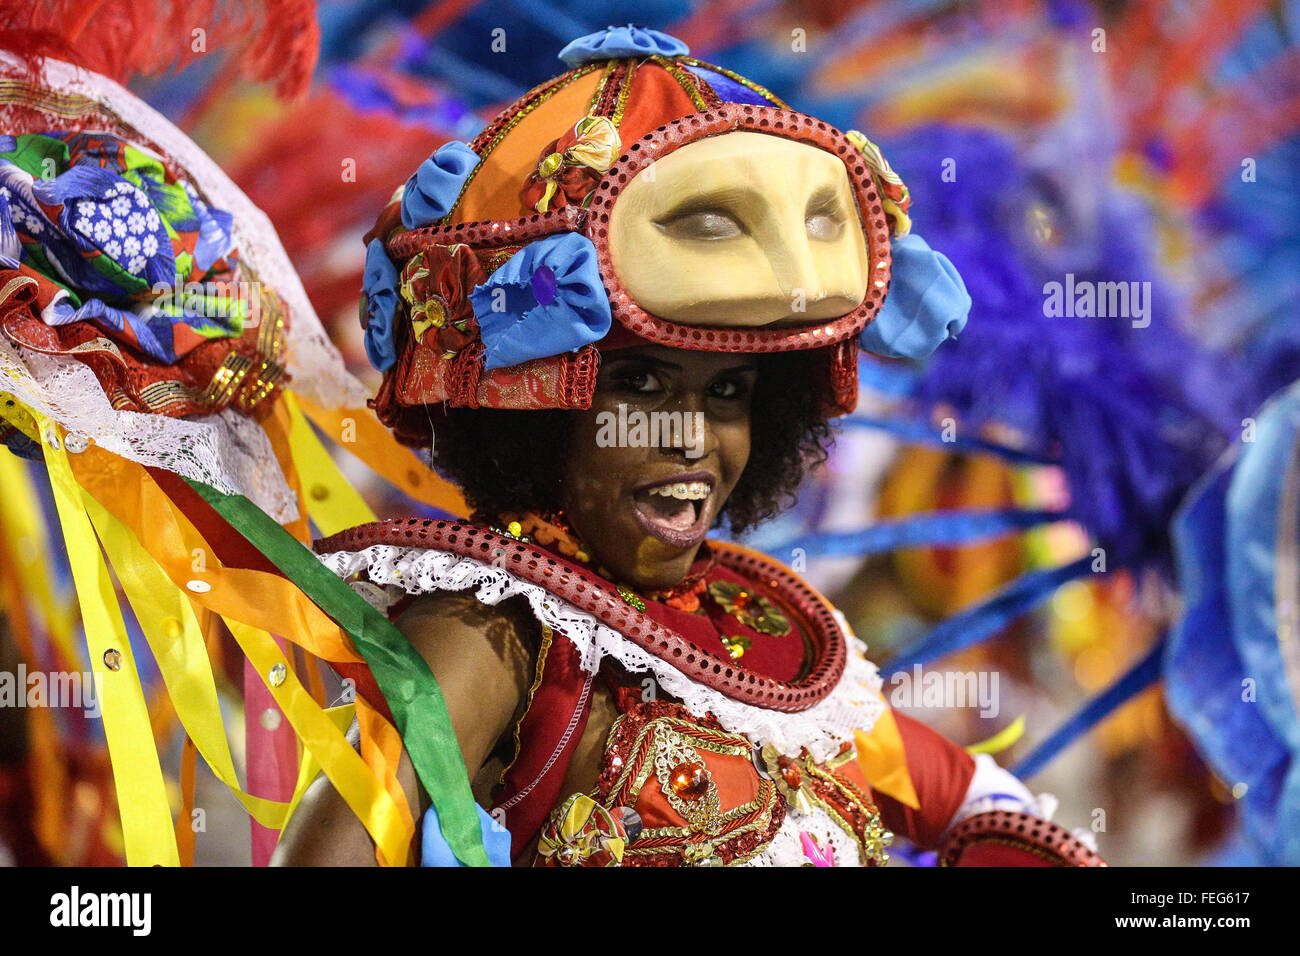 Rio De Janeiro, Brazil. 6th Feb, 2016. An artist performs during the Carnival in the Marques de Sapucai Sambadrome, in Rio de Janeiro, Brazil, Feb. 6, 2016. © AGENCIA ESTADO/Xinhua/Alamy Live News Stock Photo